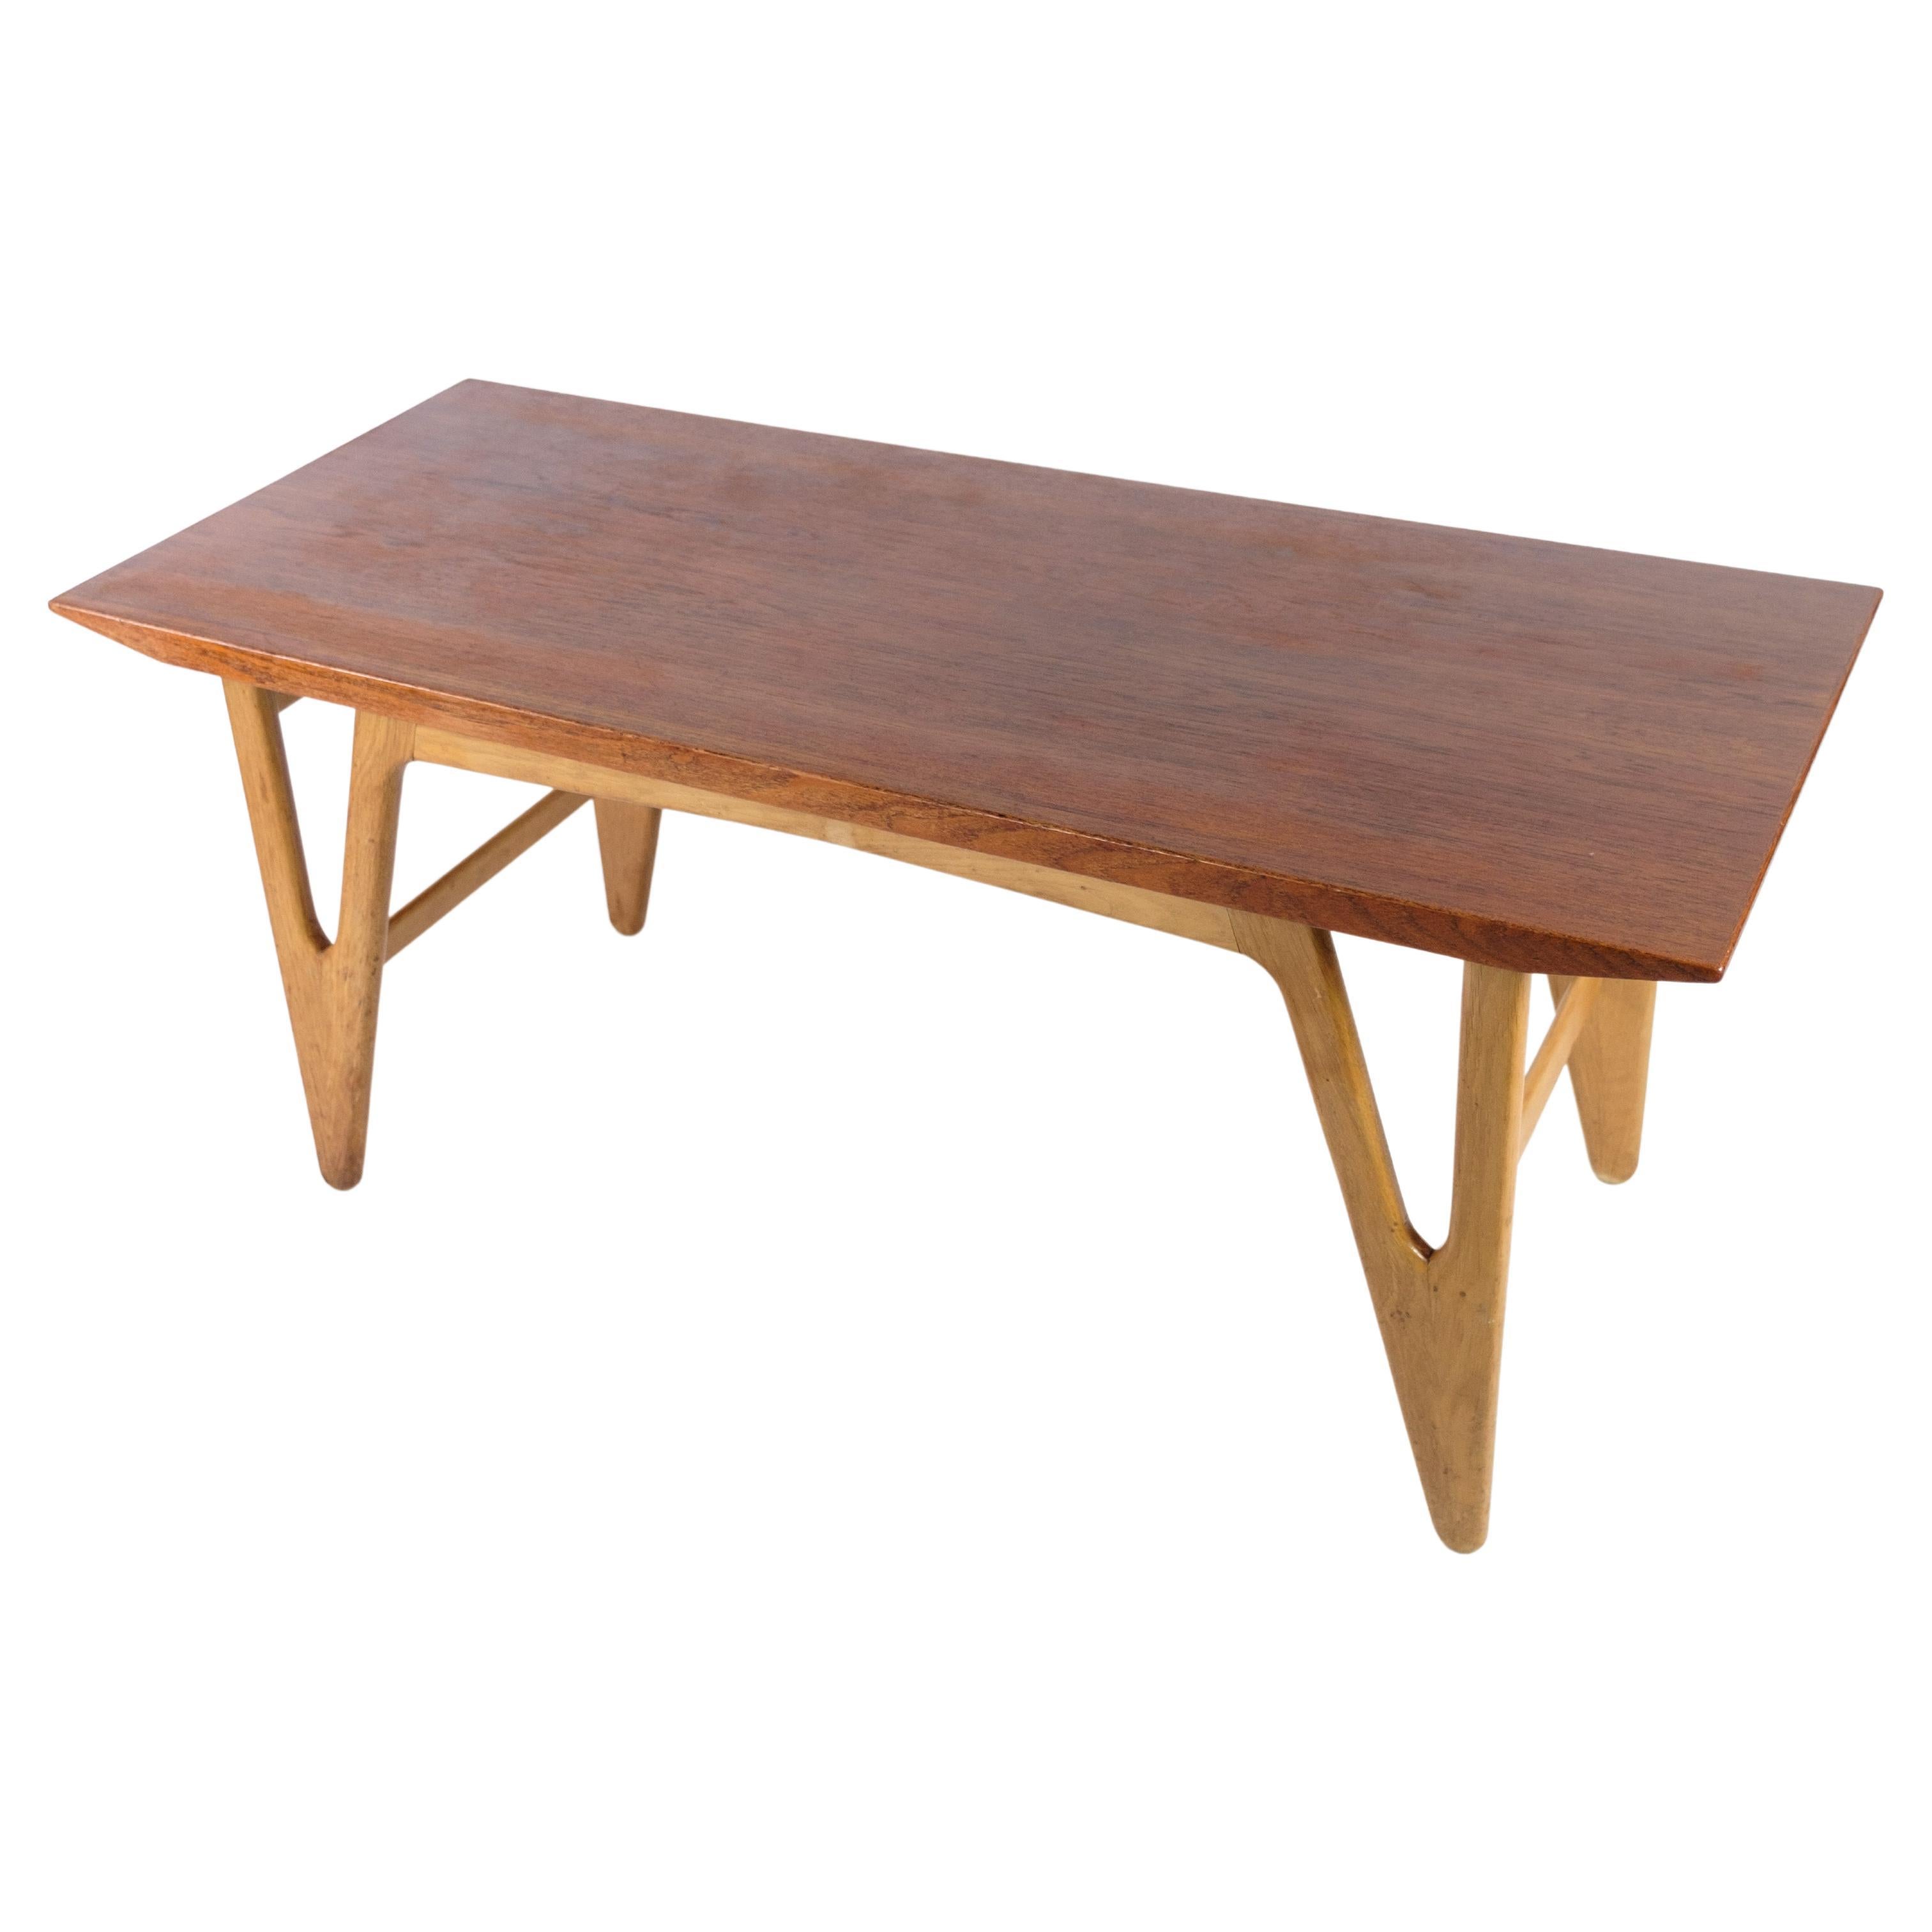 Coffee table Made In Teak & Oak, Danish design From 1960